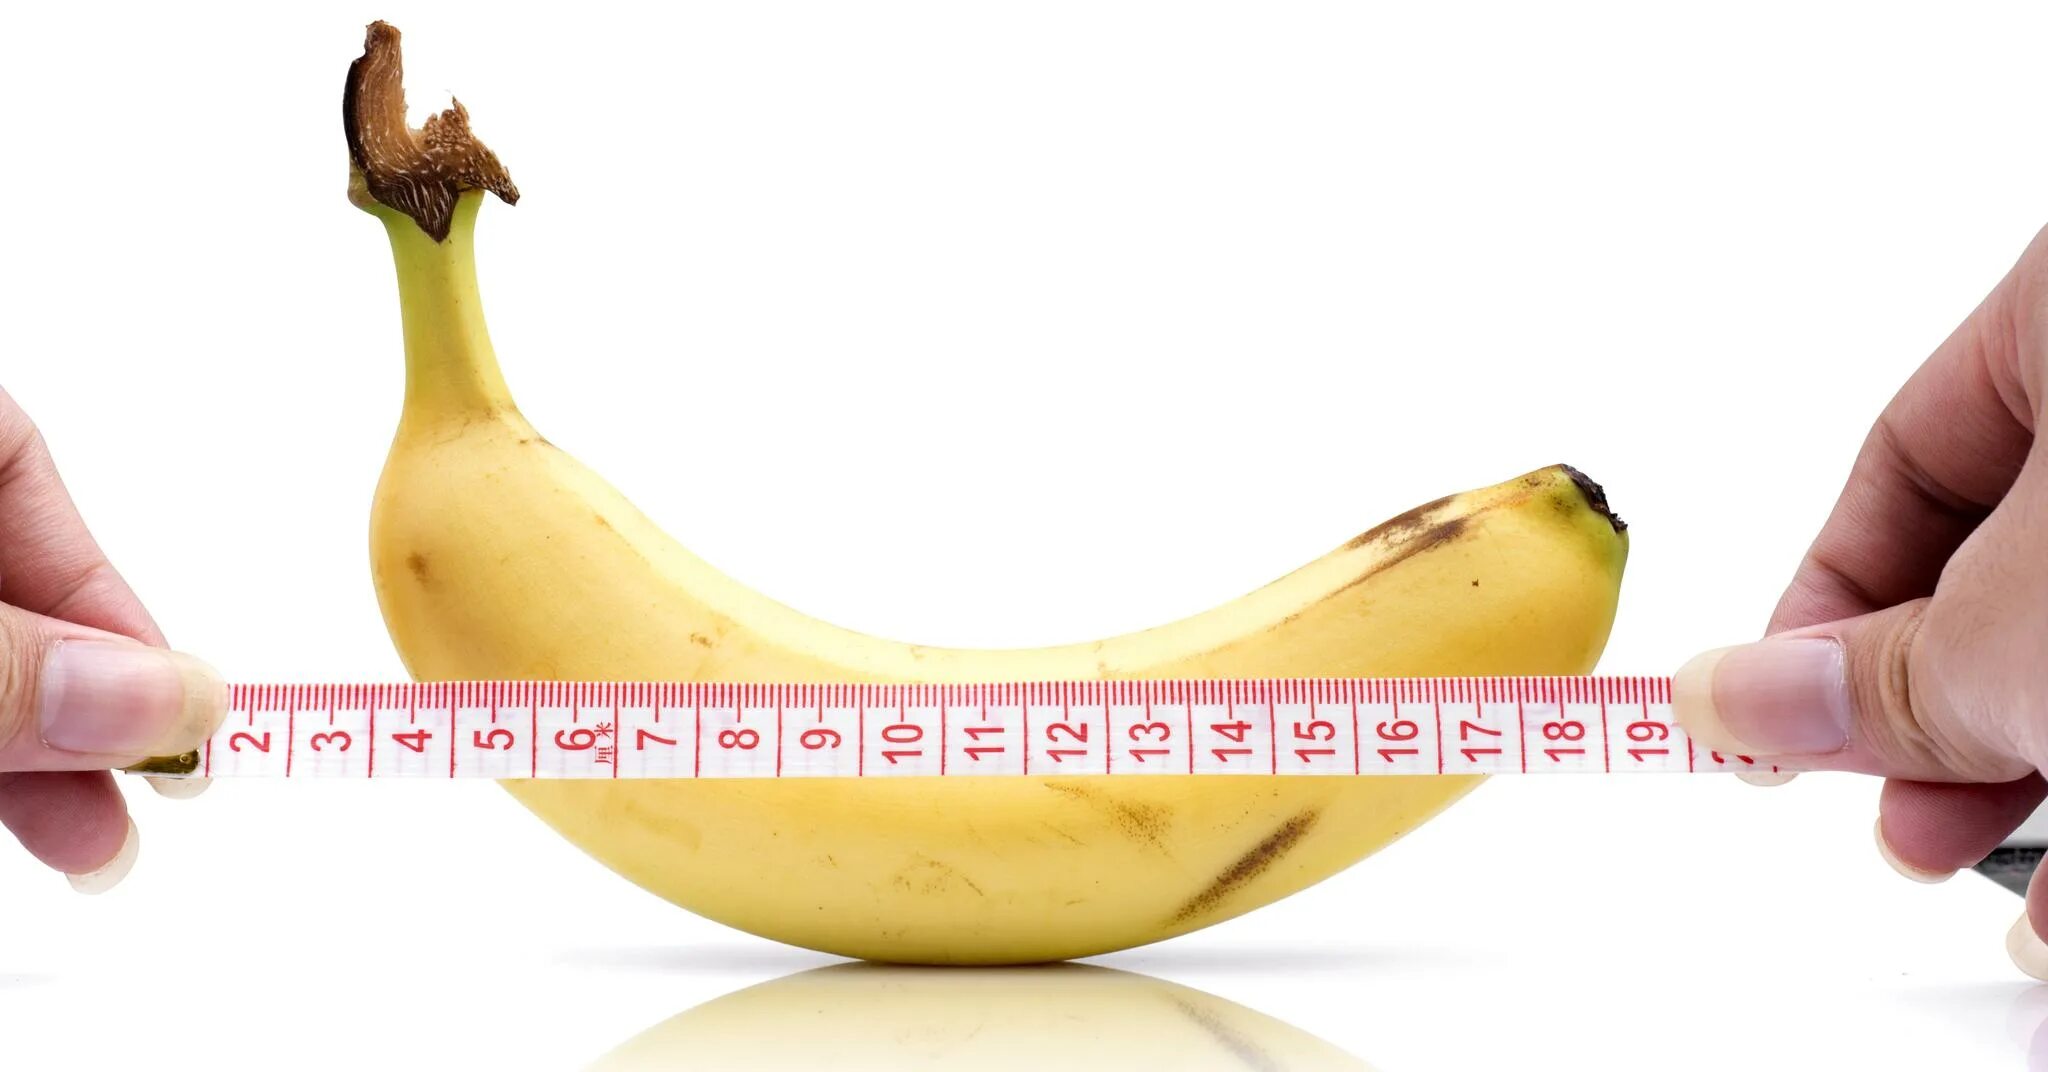 Good penis. Банан с линейкой. Банан 18 см. Банан 20 см. Банан 17 см.